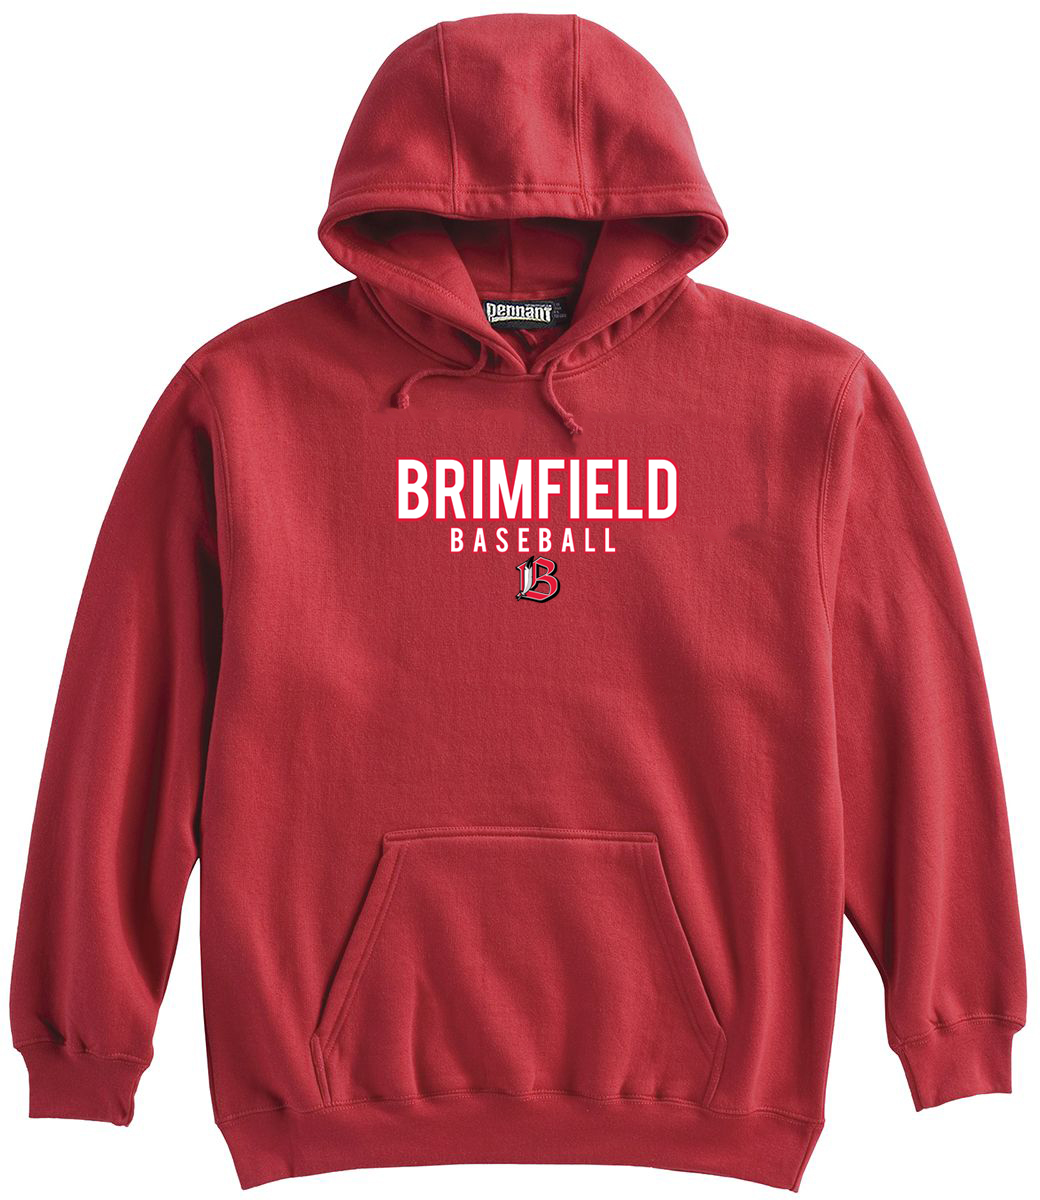 Brimfield Baseball Sweatshirt